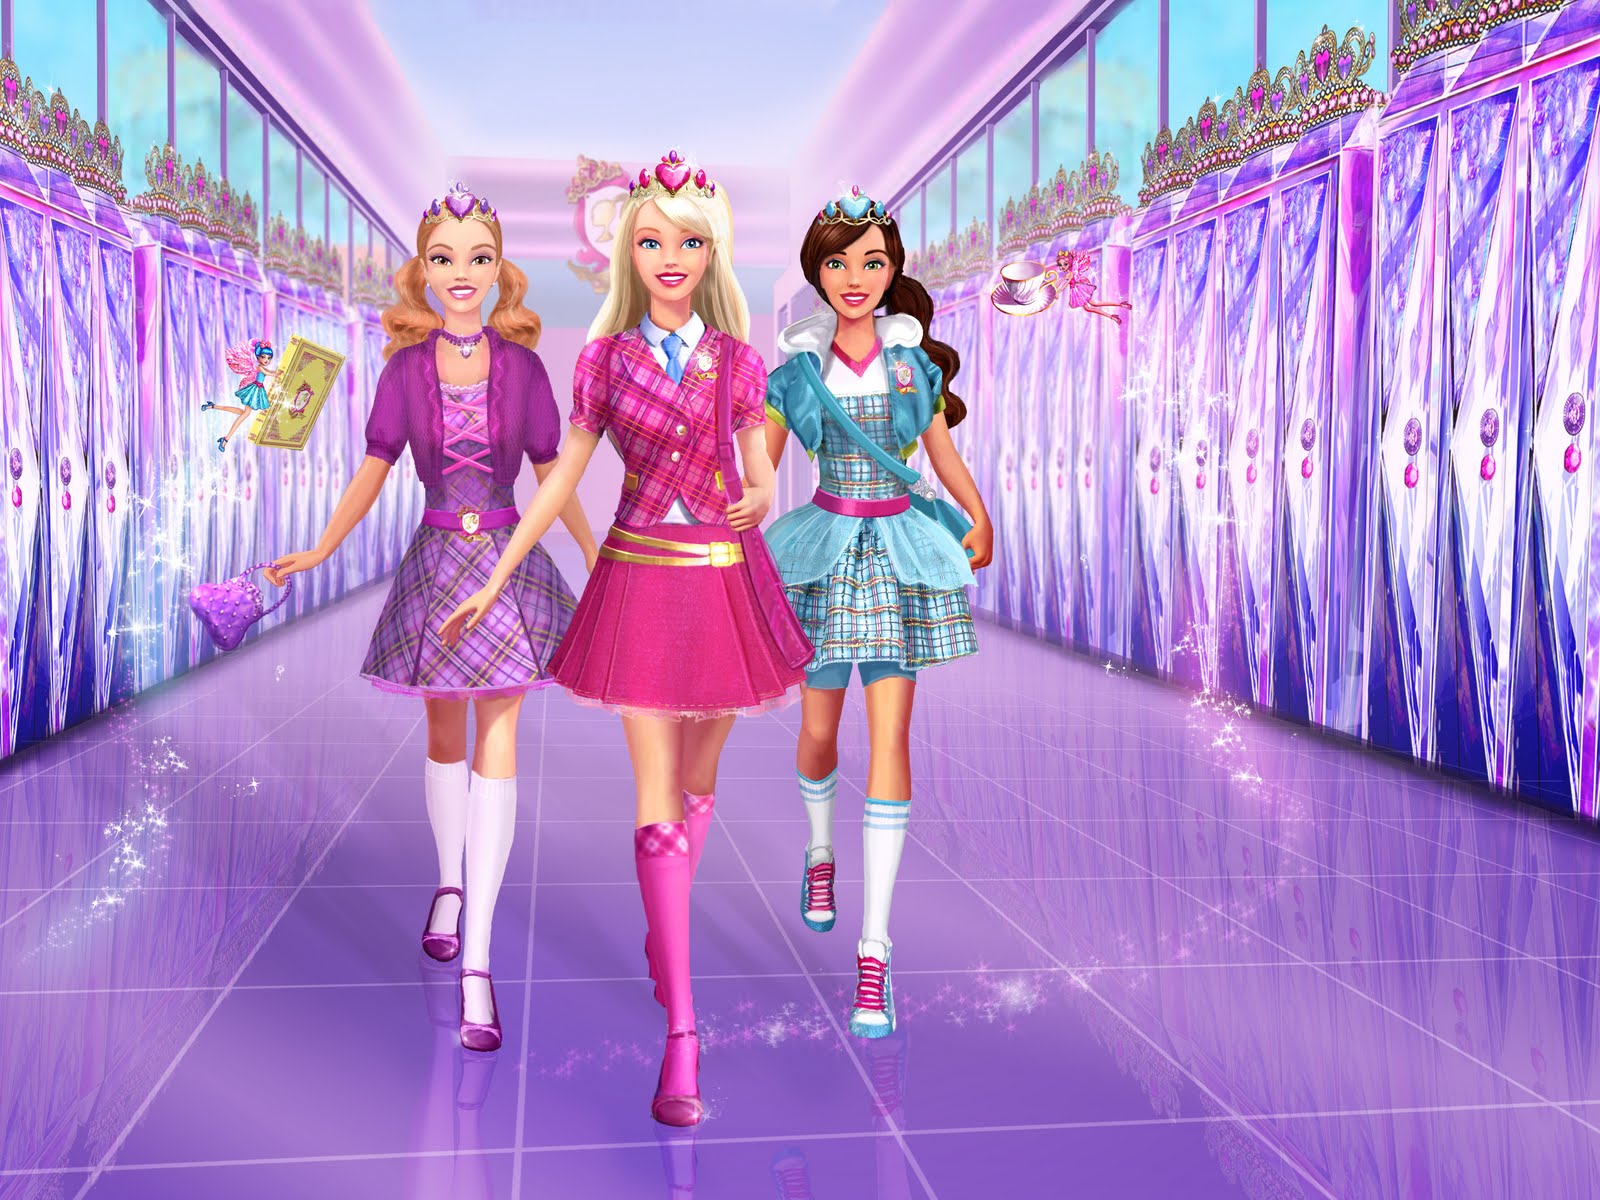 eurekano-s-barbie-princess-charm-school-wallpaper-30567111-fanpop